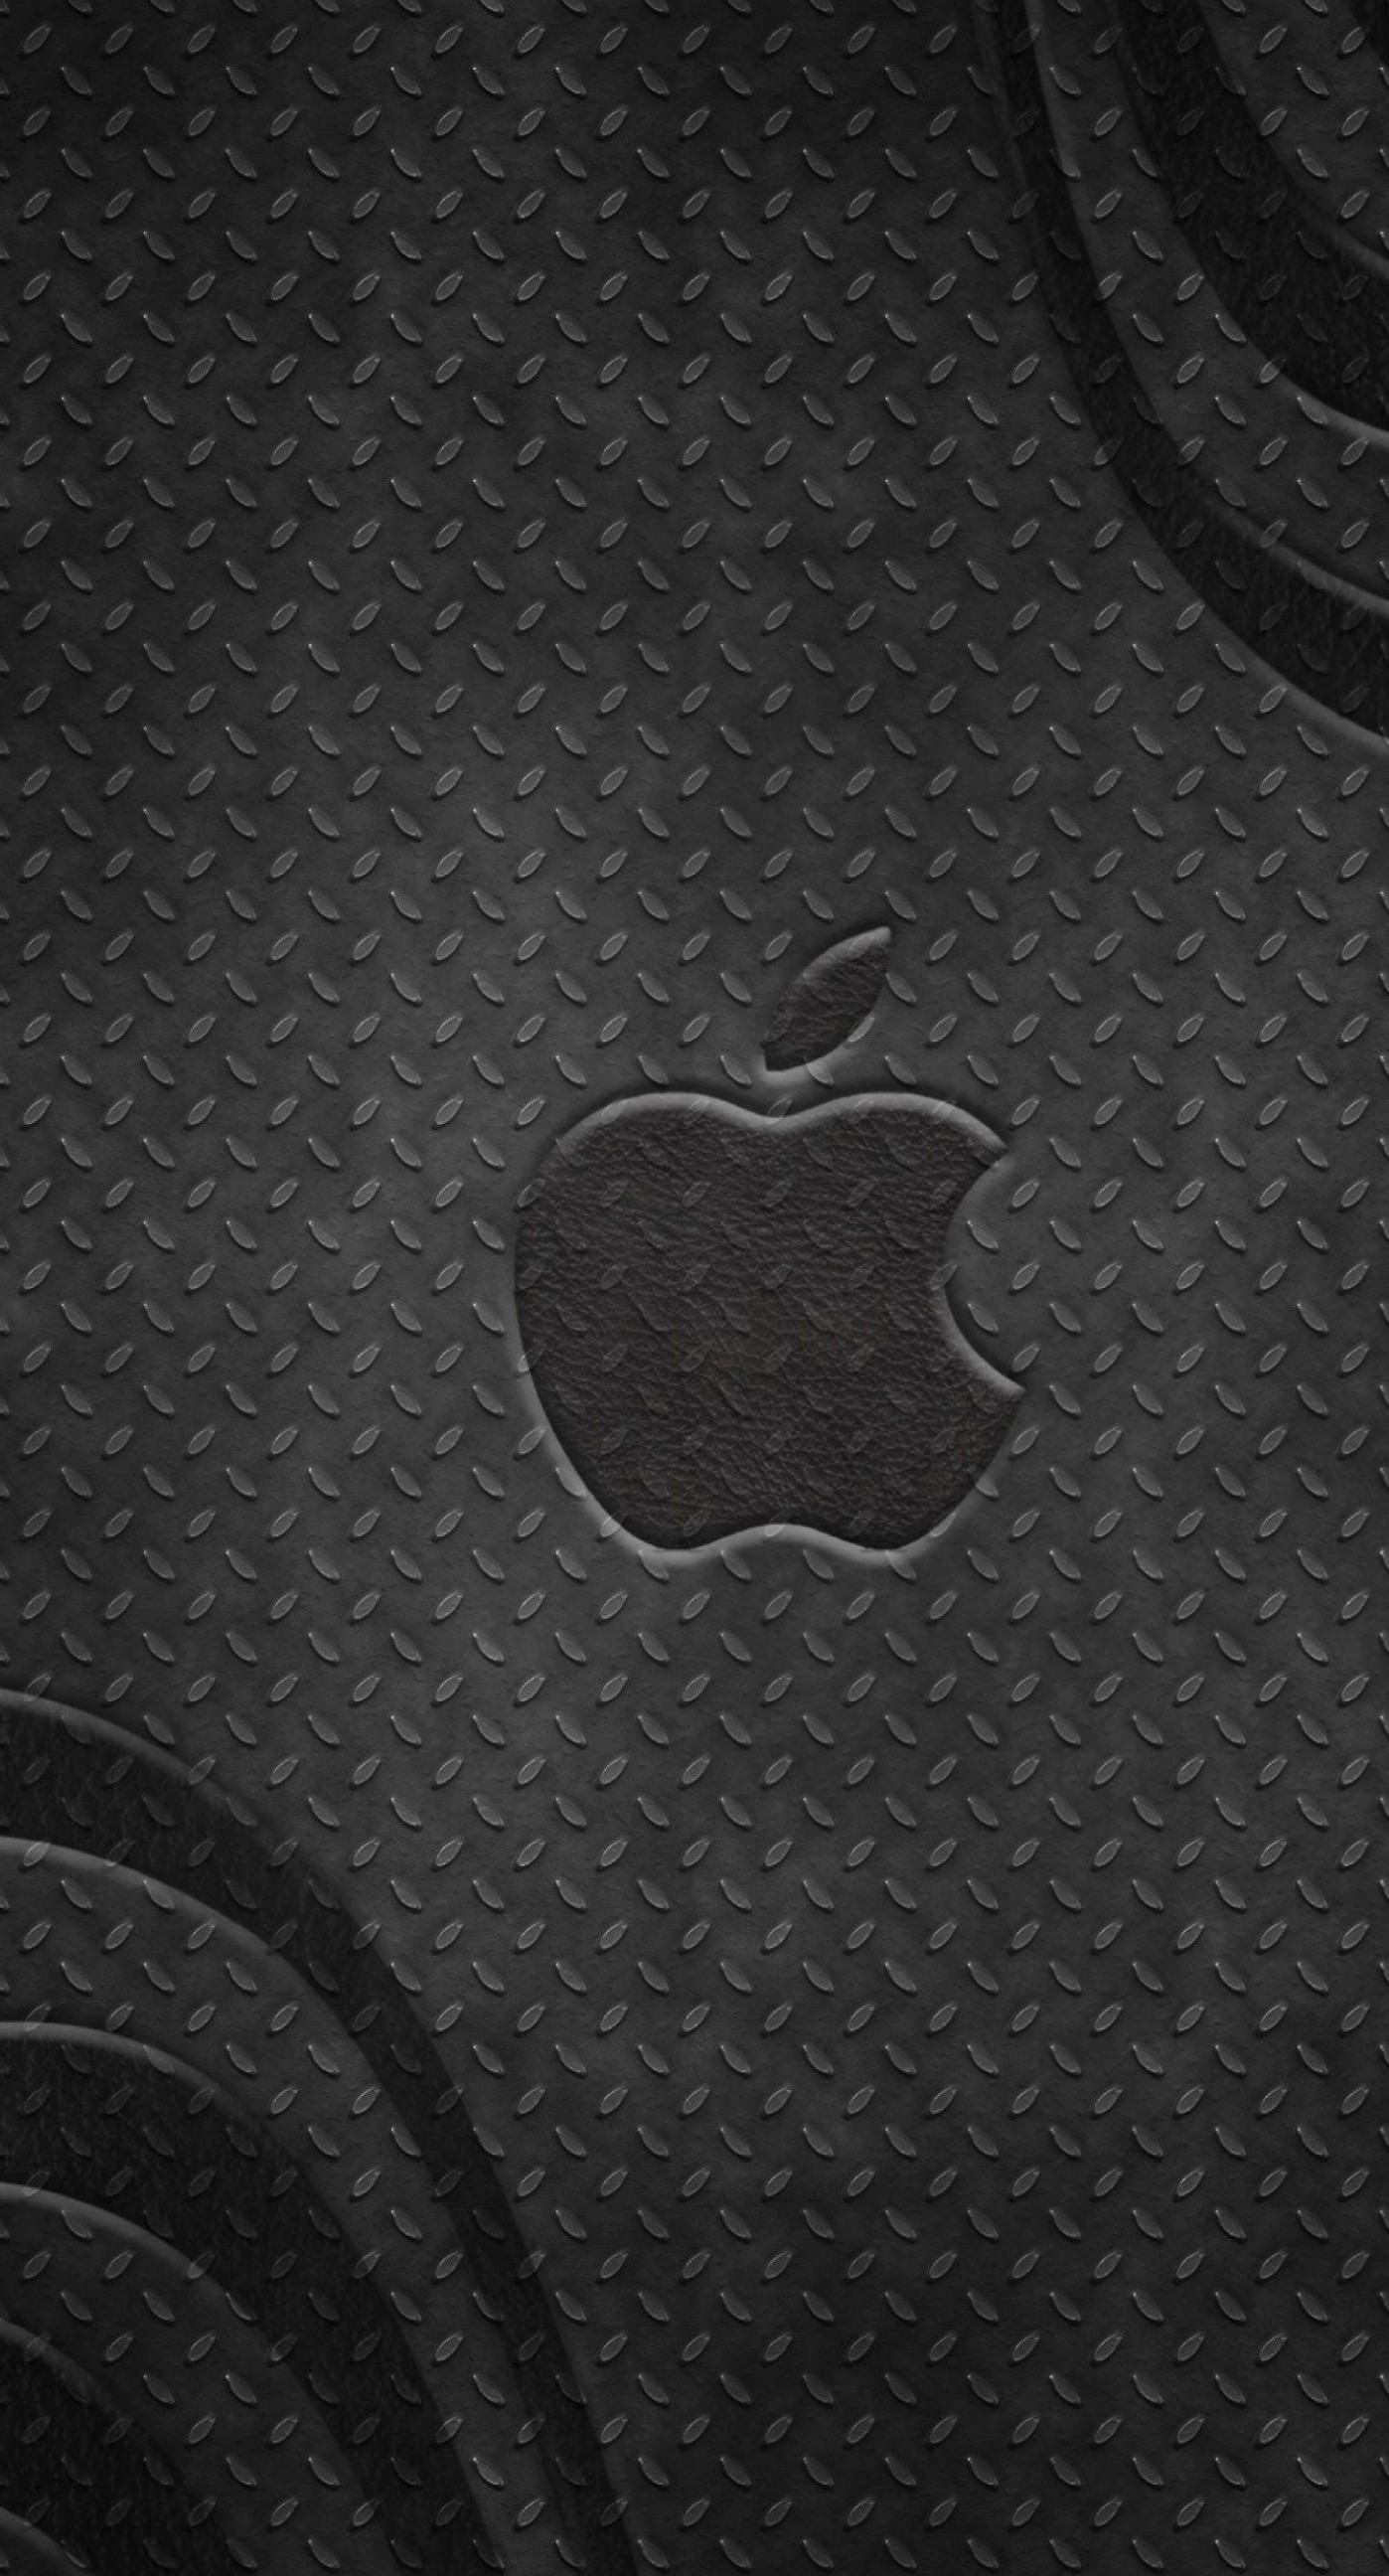 Apple Black | wallpaper.sc iPhone6sPlus